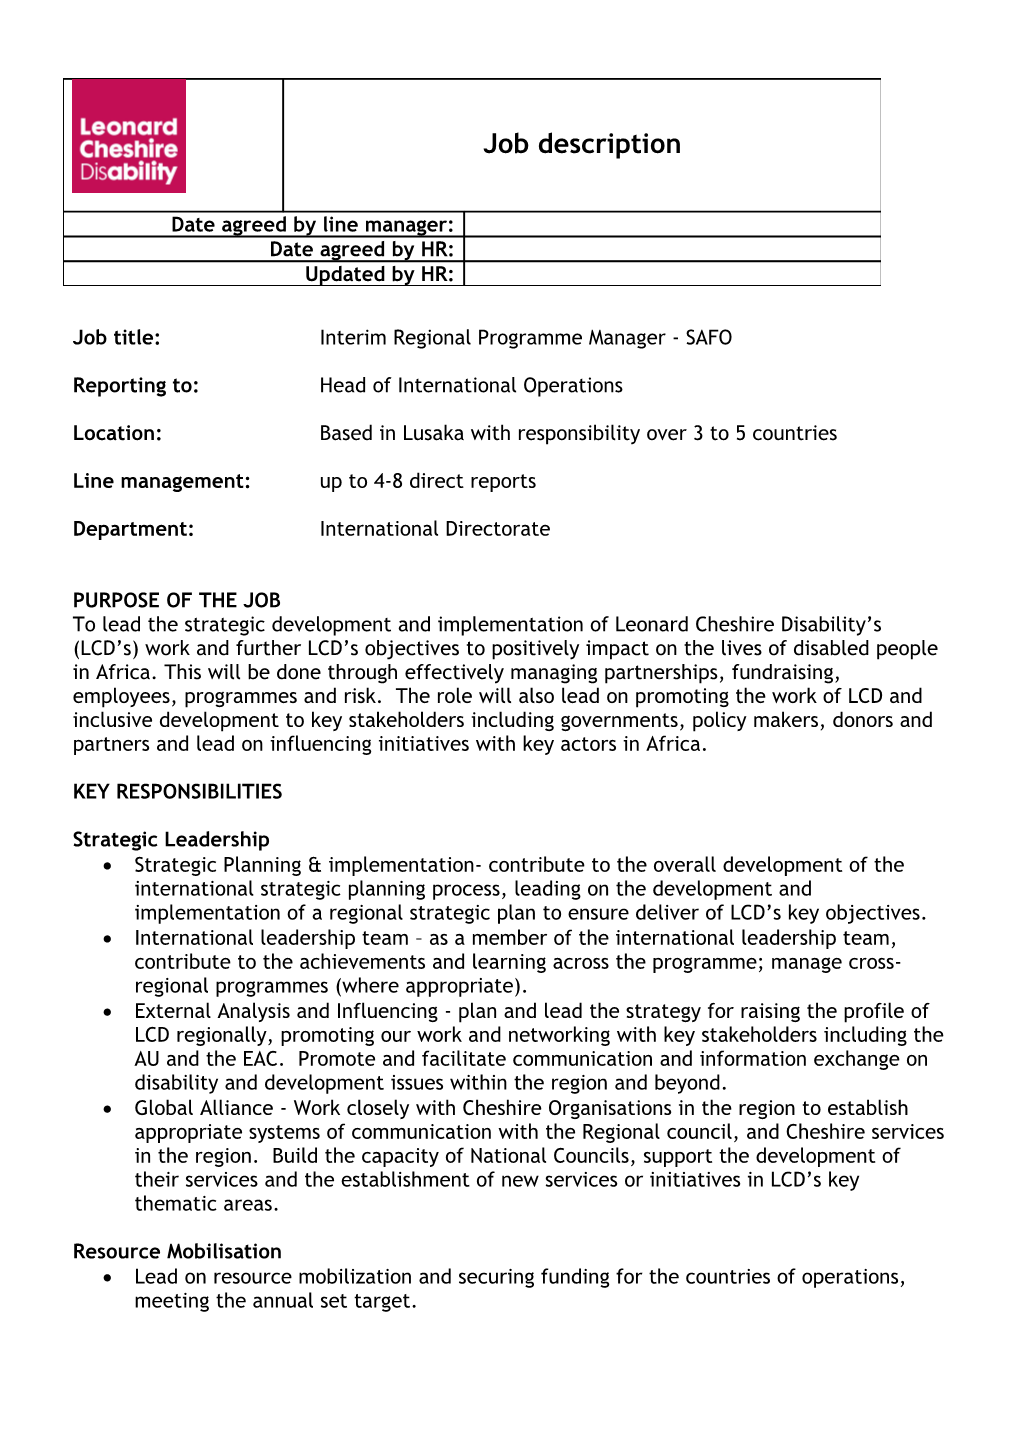 Job Title:Interim Regional Programme Manager - SAFO